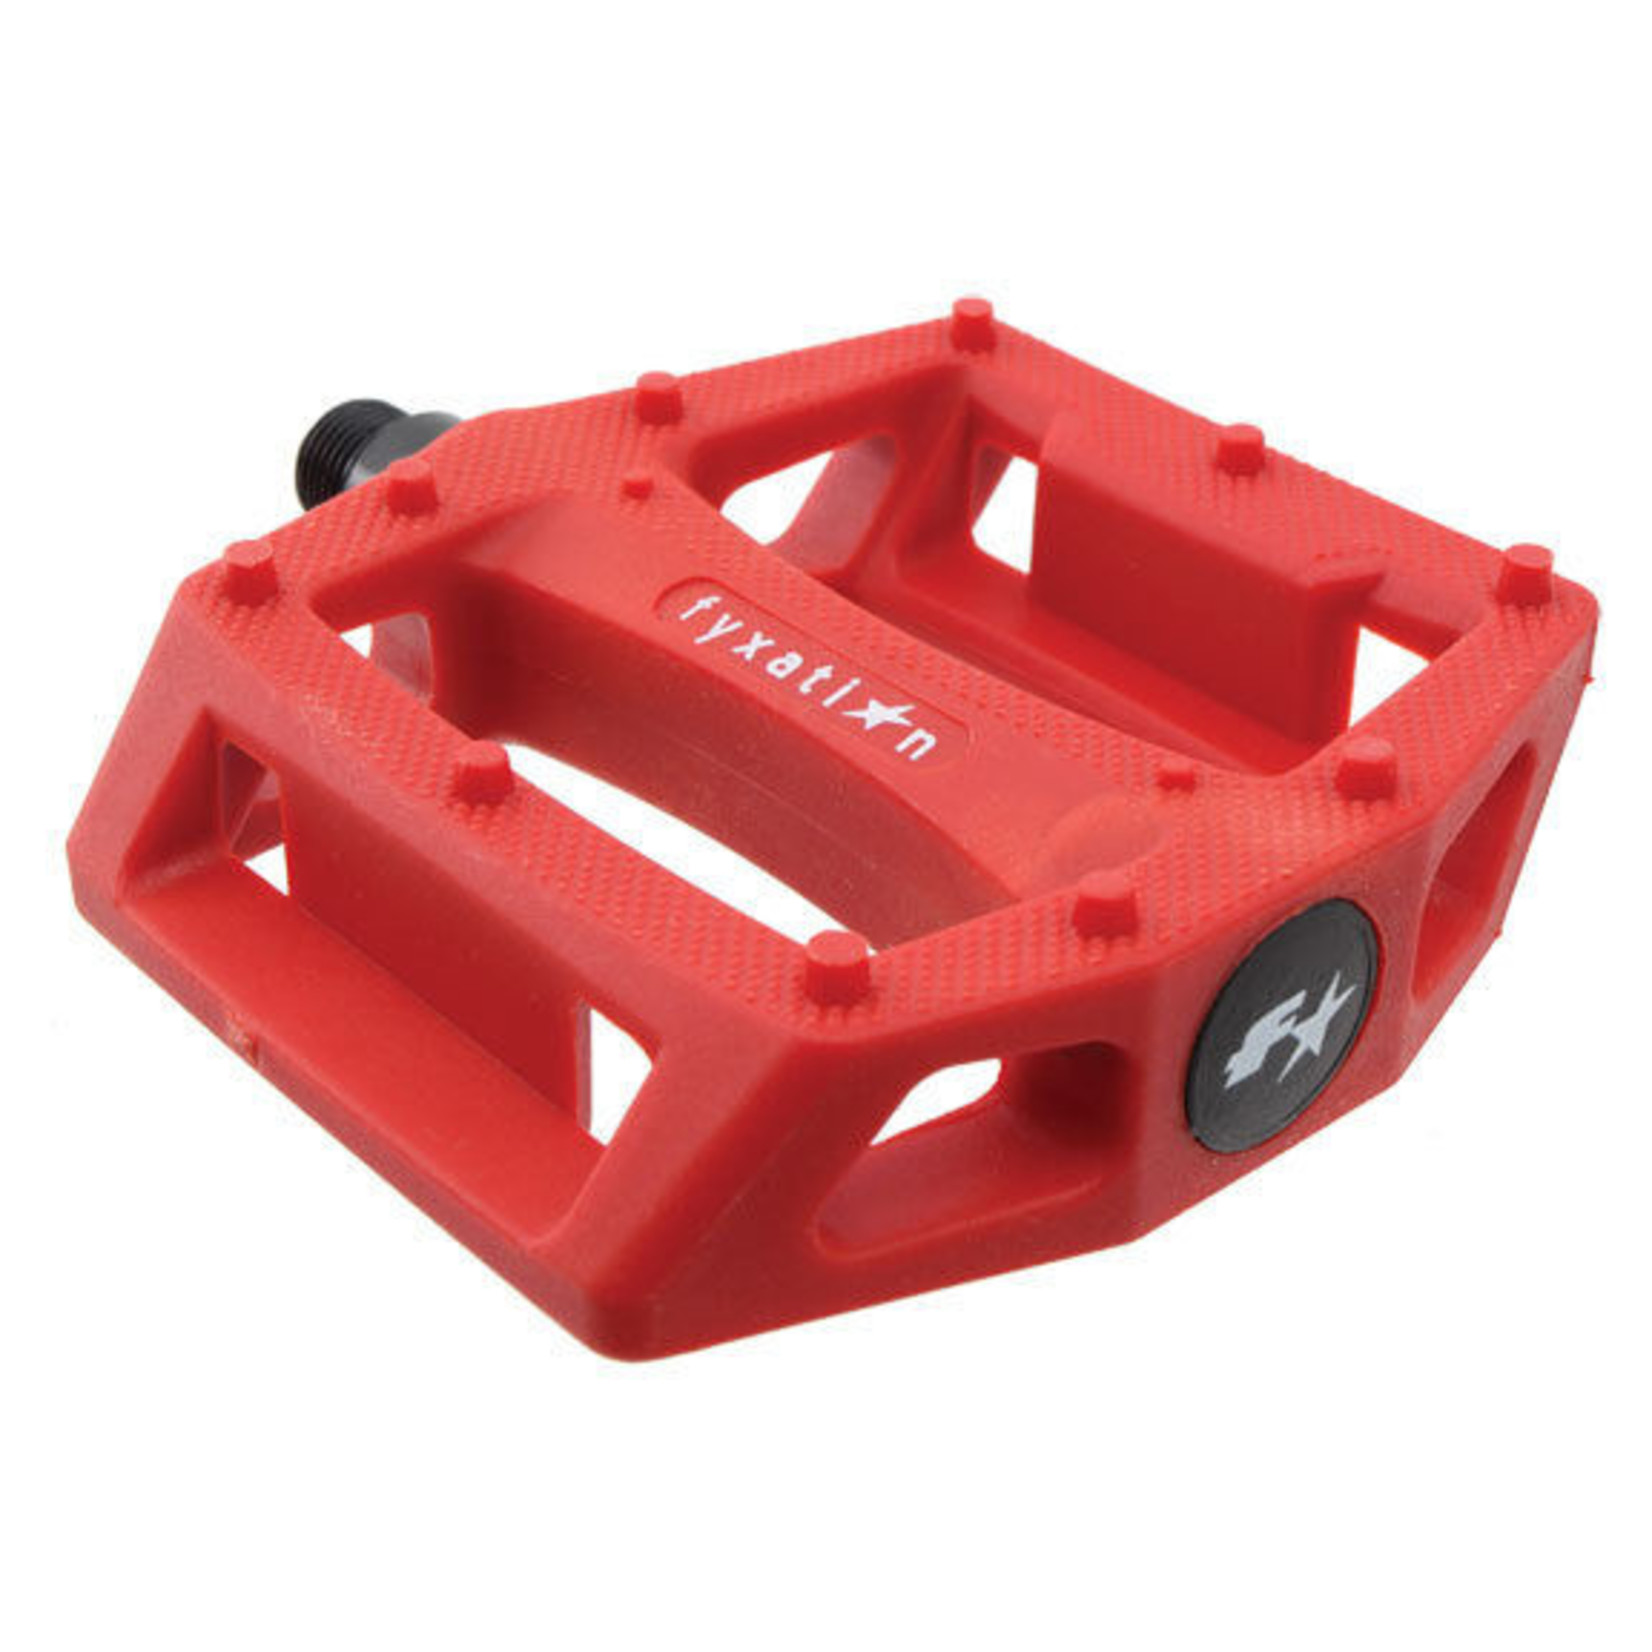 Fyxation Pedals Gates Pedals - Platform Composite/Plastic 9/16 Red